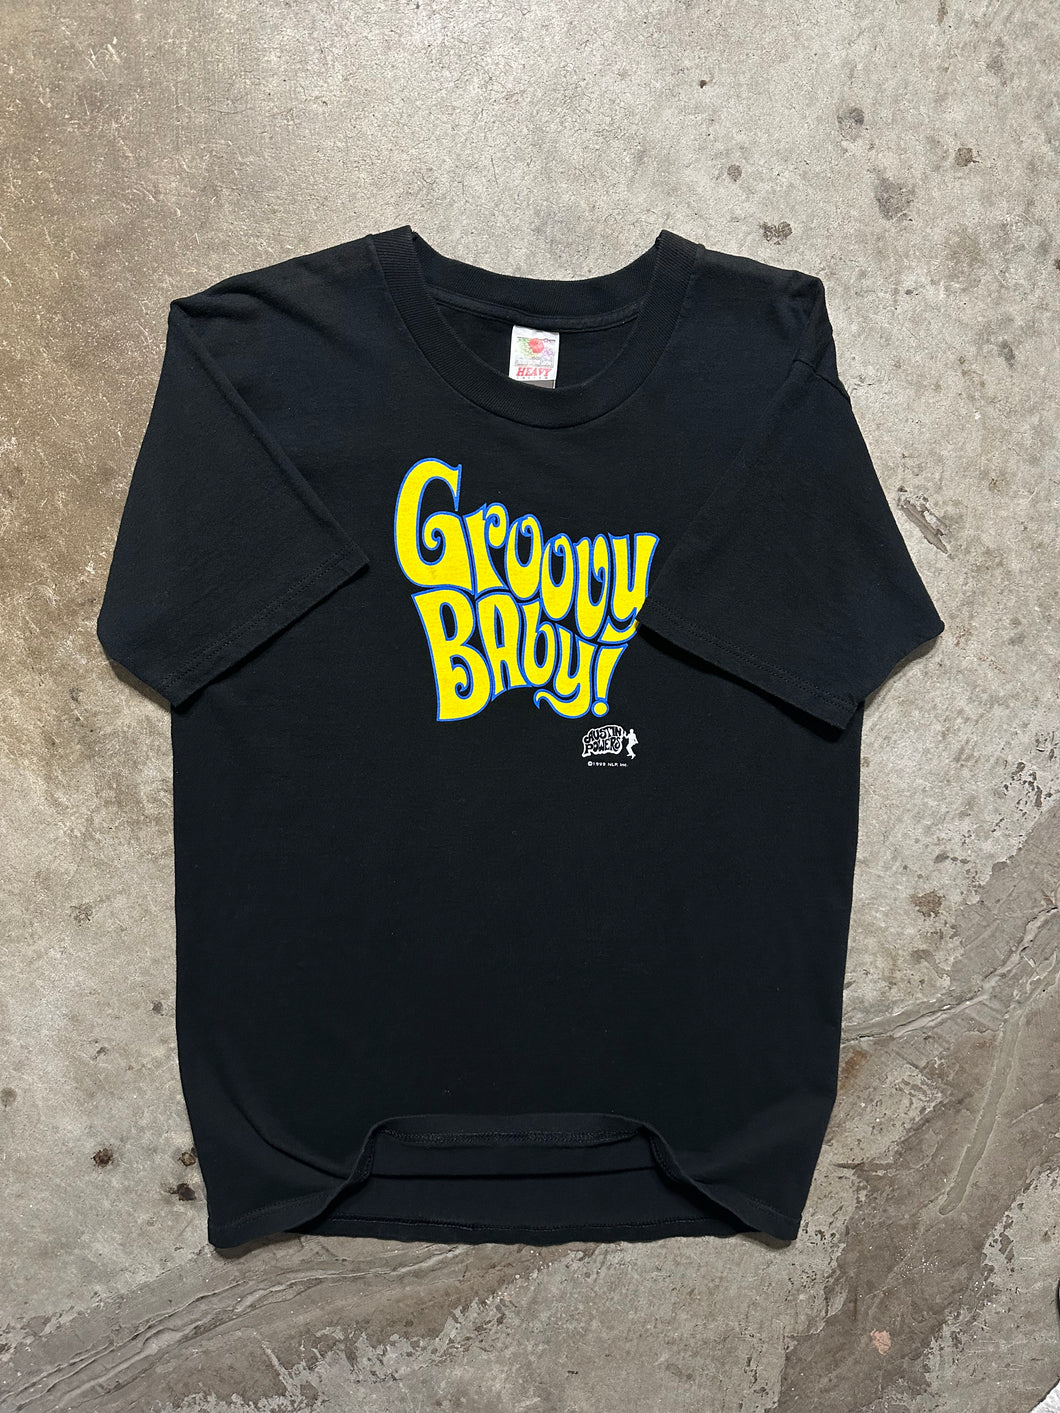 Vintage Austin Powers Groovy Baby Tee Shirt (Large)